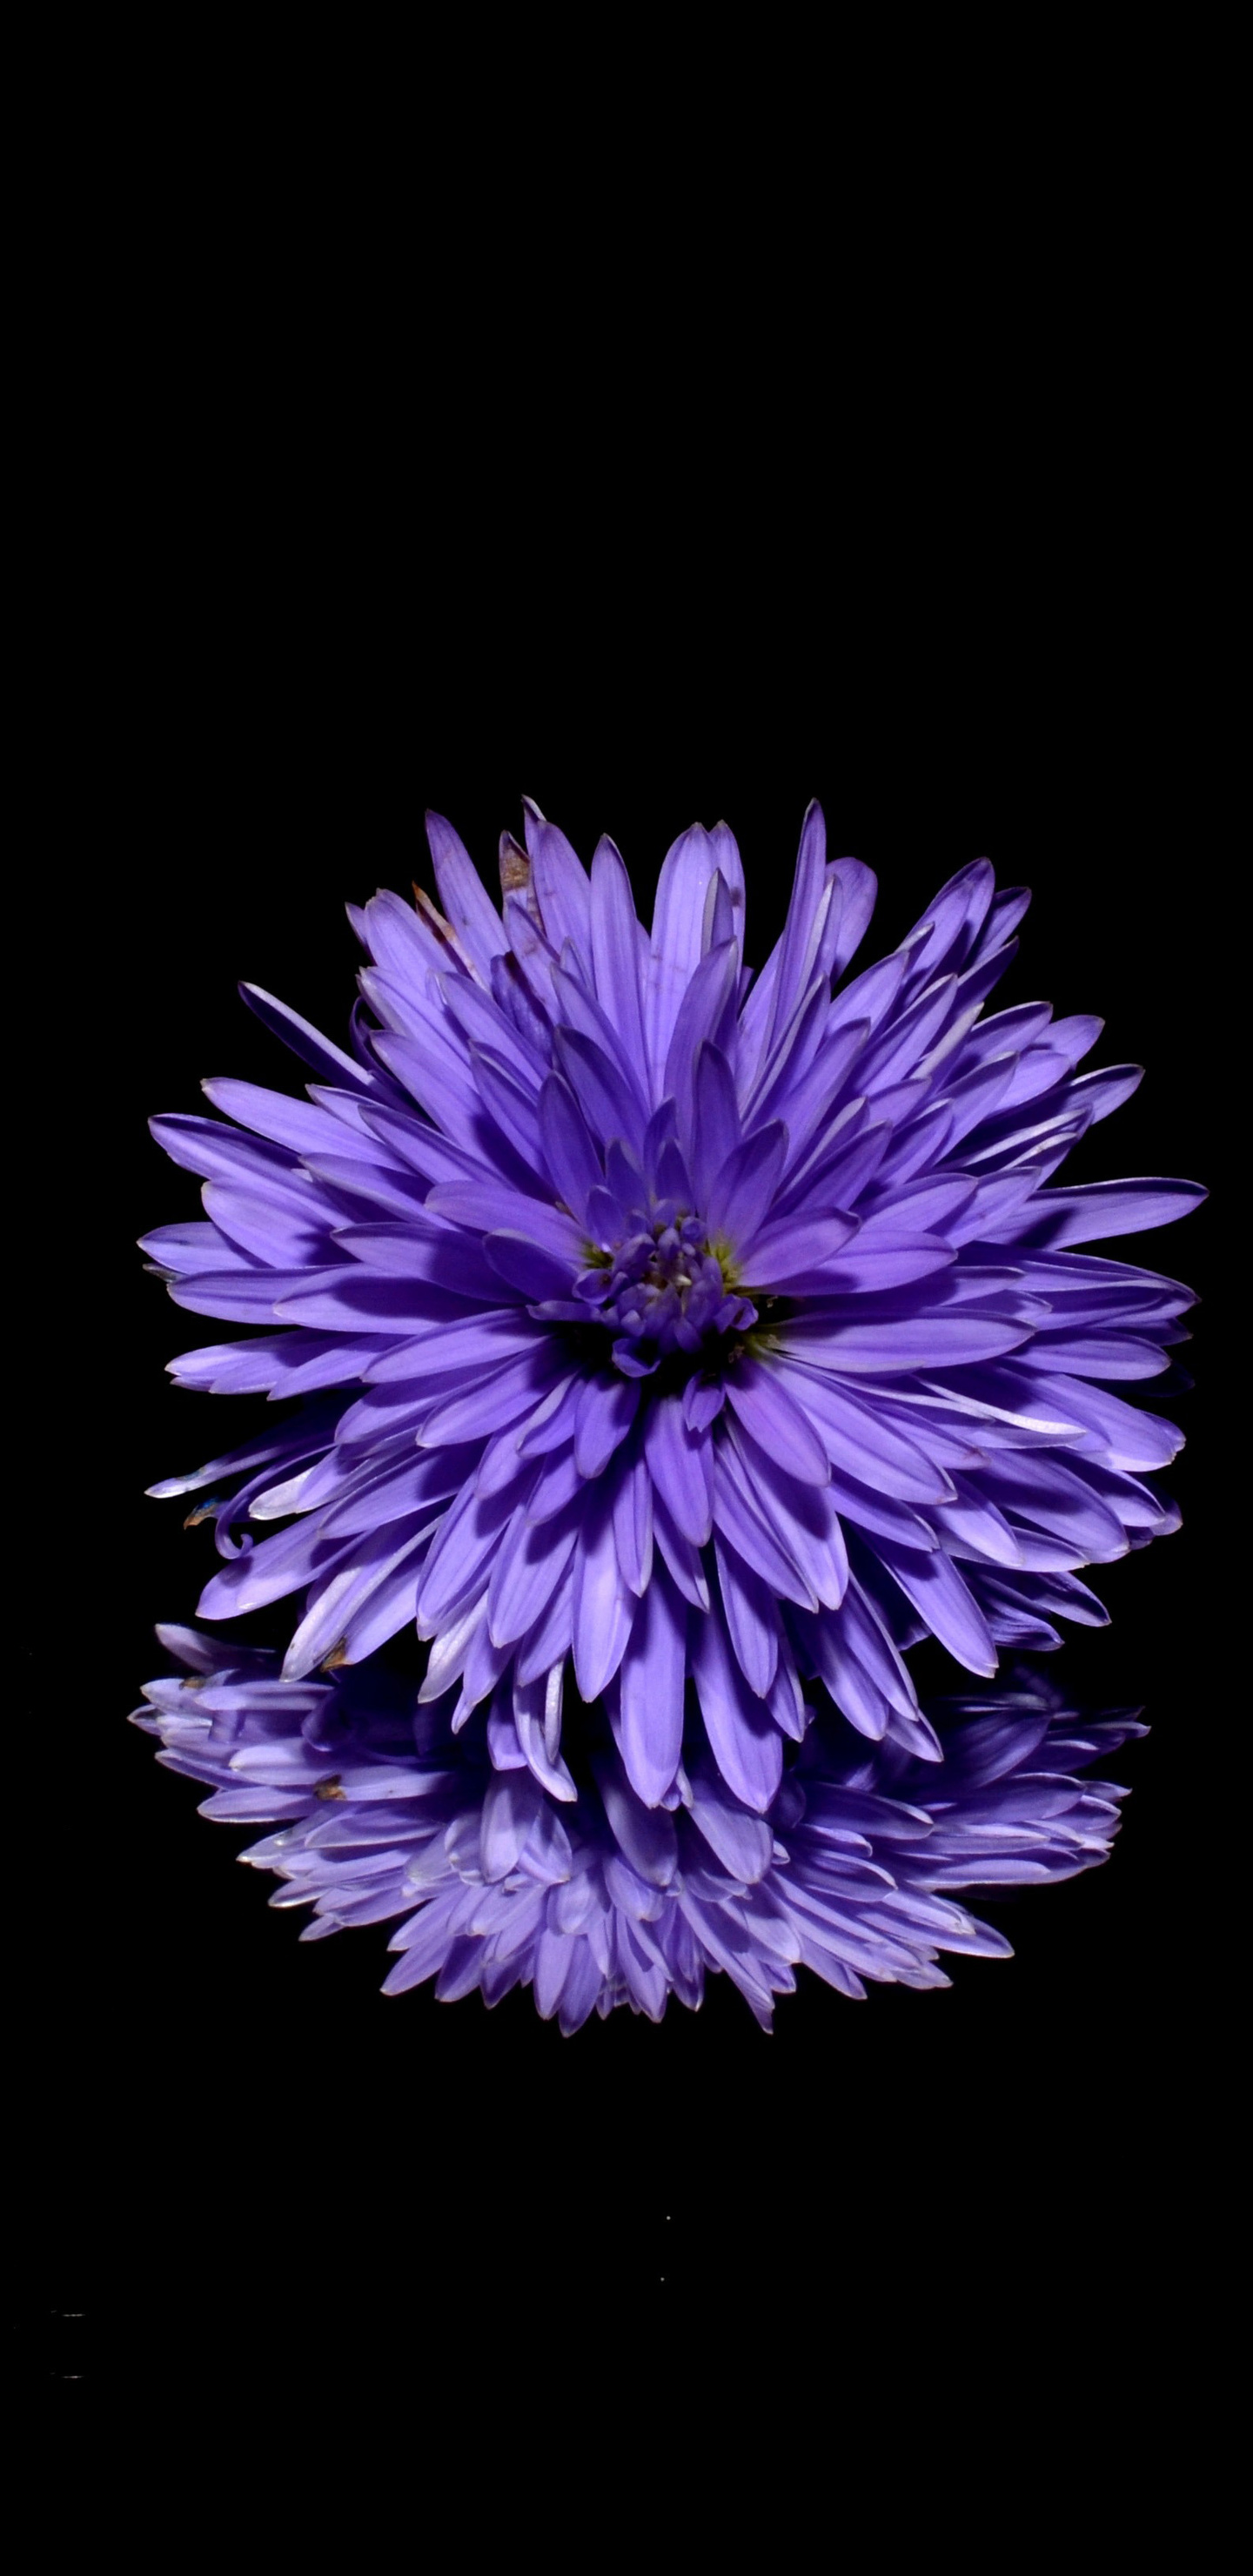 1440x2960 Blossom Purple Flower Black Background Reflection